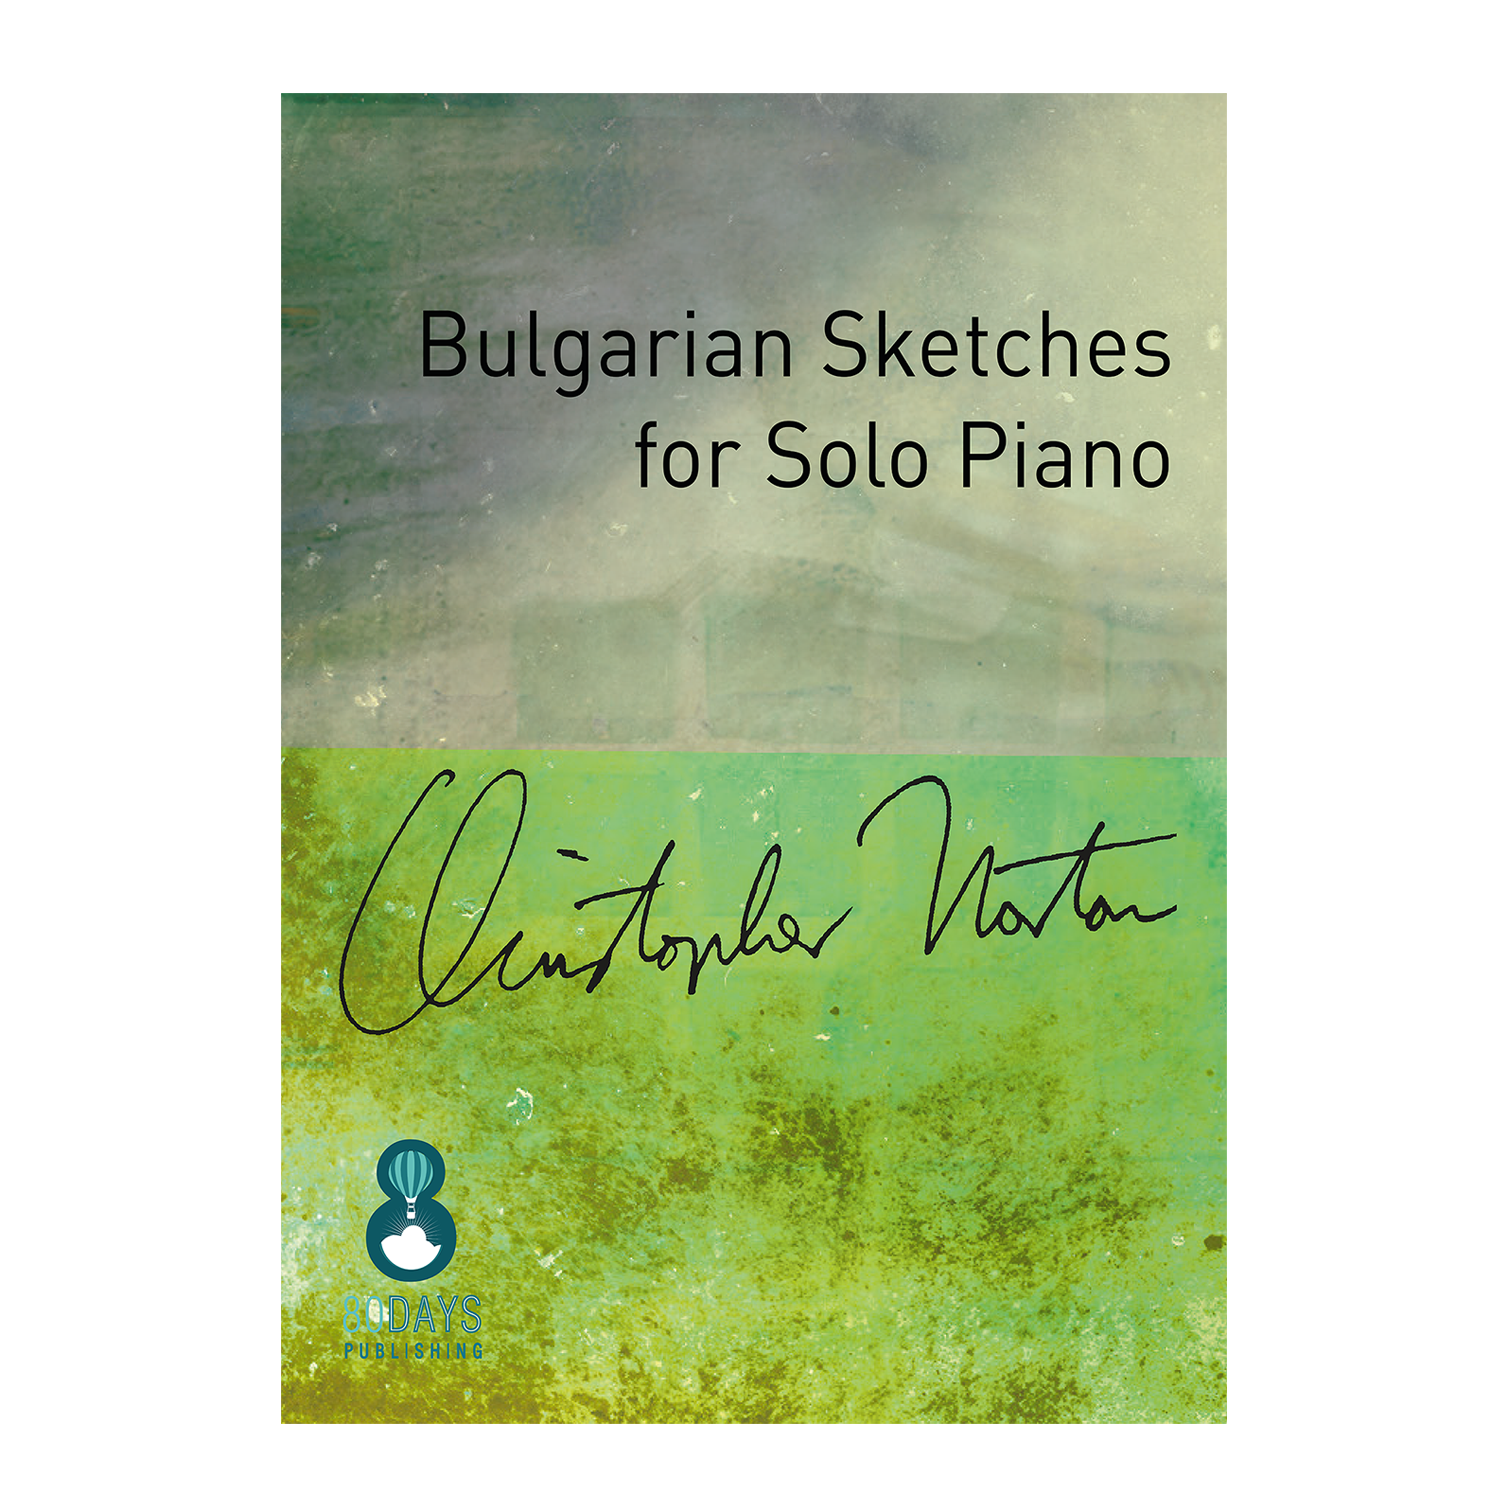 Christopher Norton - Bulgarian Sketches for Solo Piano